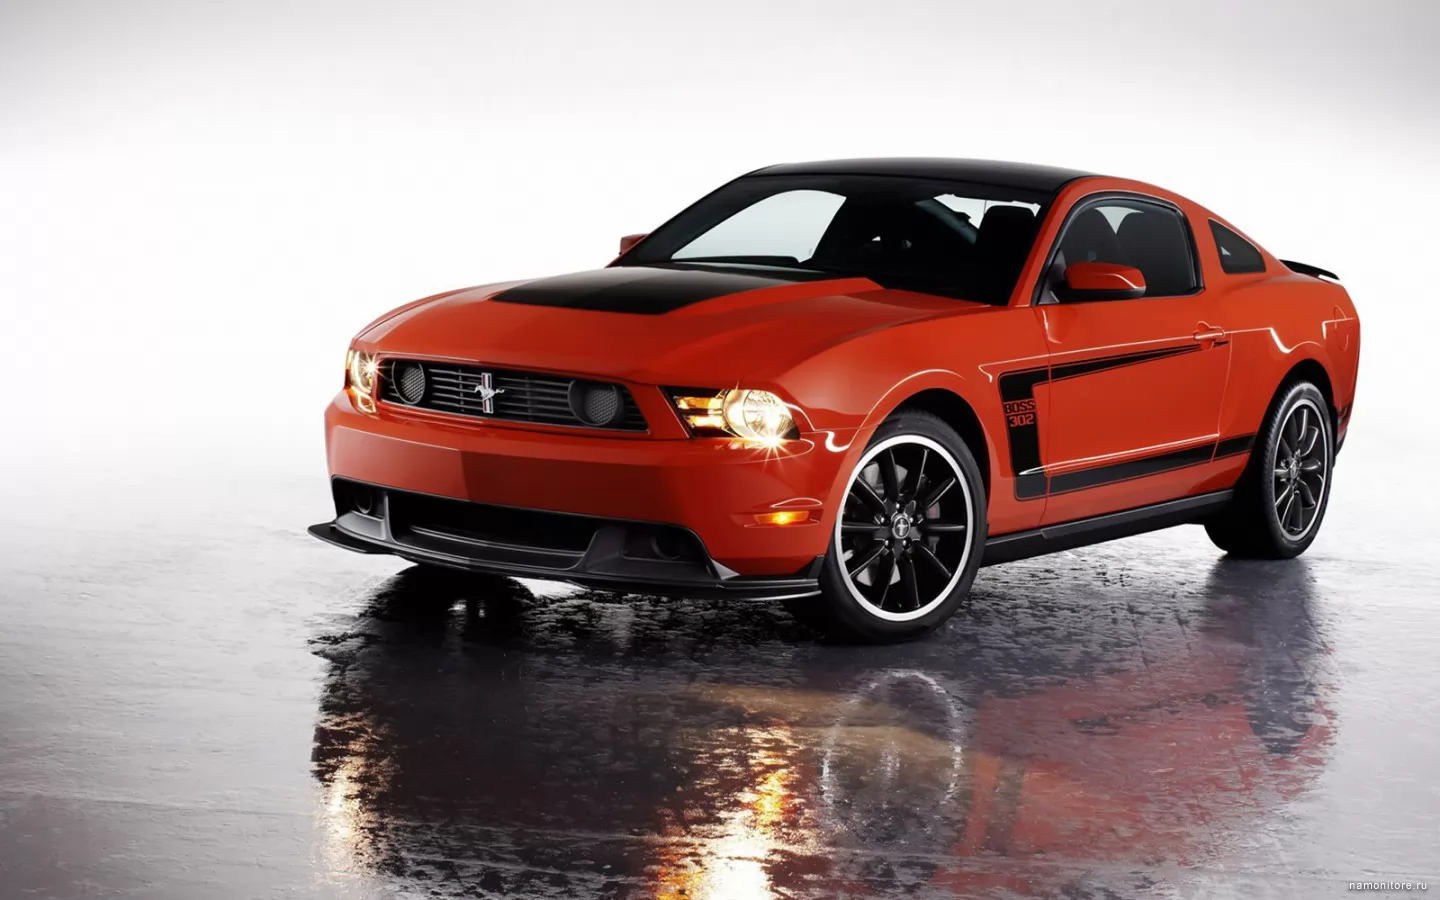 Ford Mustang Boss 302, Ford, Mustang, автомобили, лучшее, оранжевое, техника х